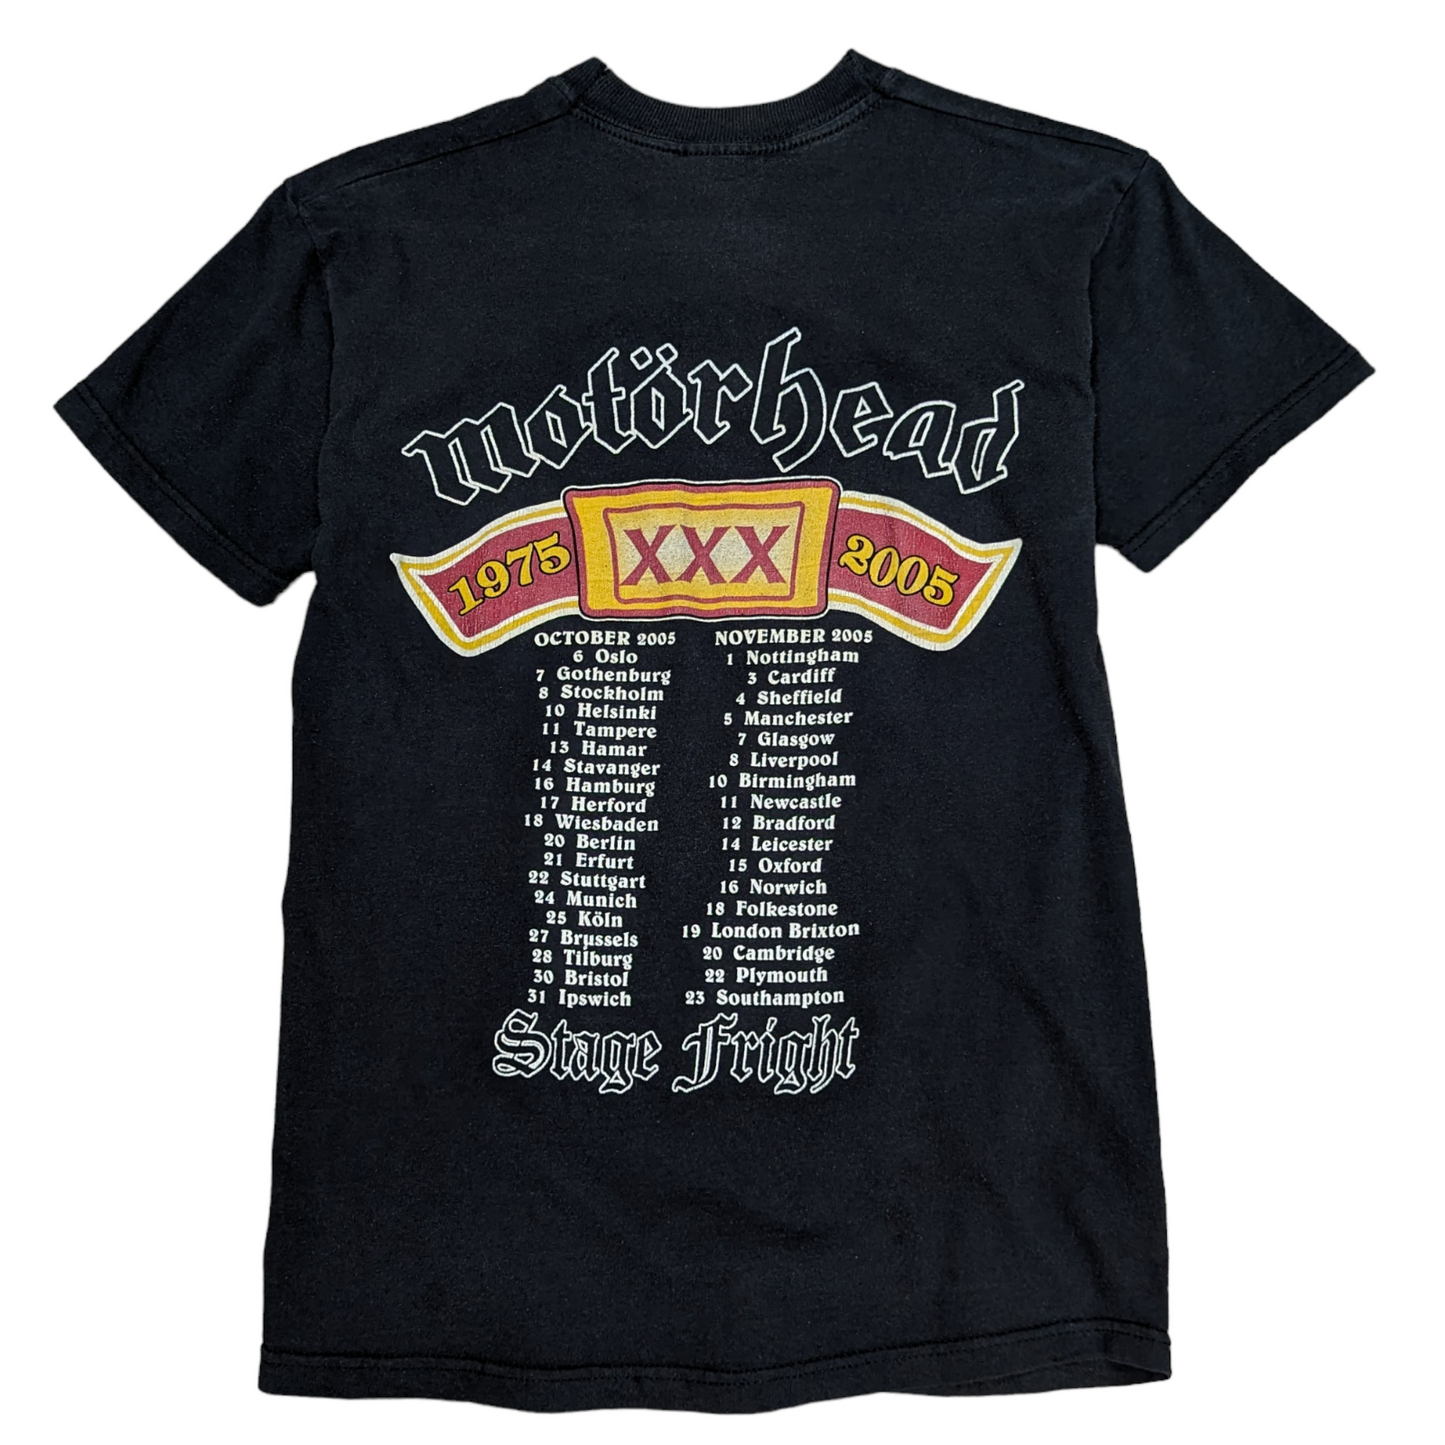 00s Motörhead T-Shirt Size XS